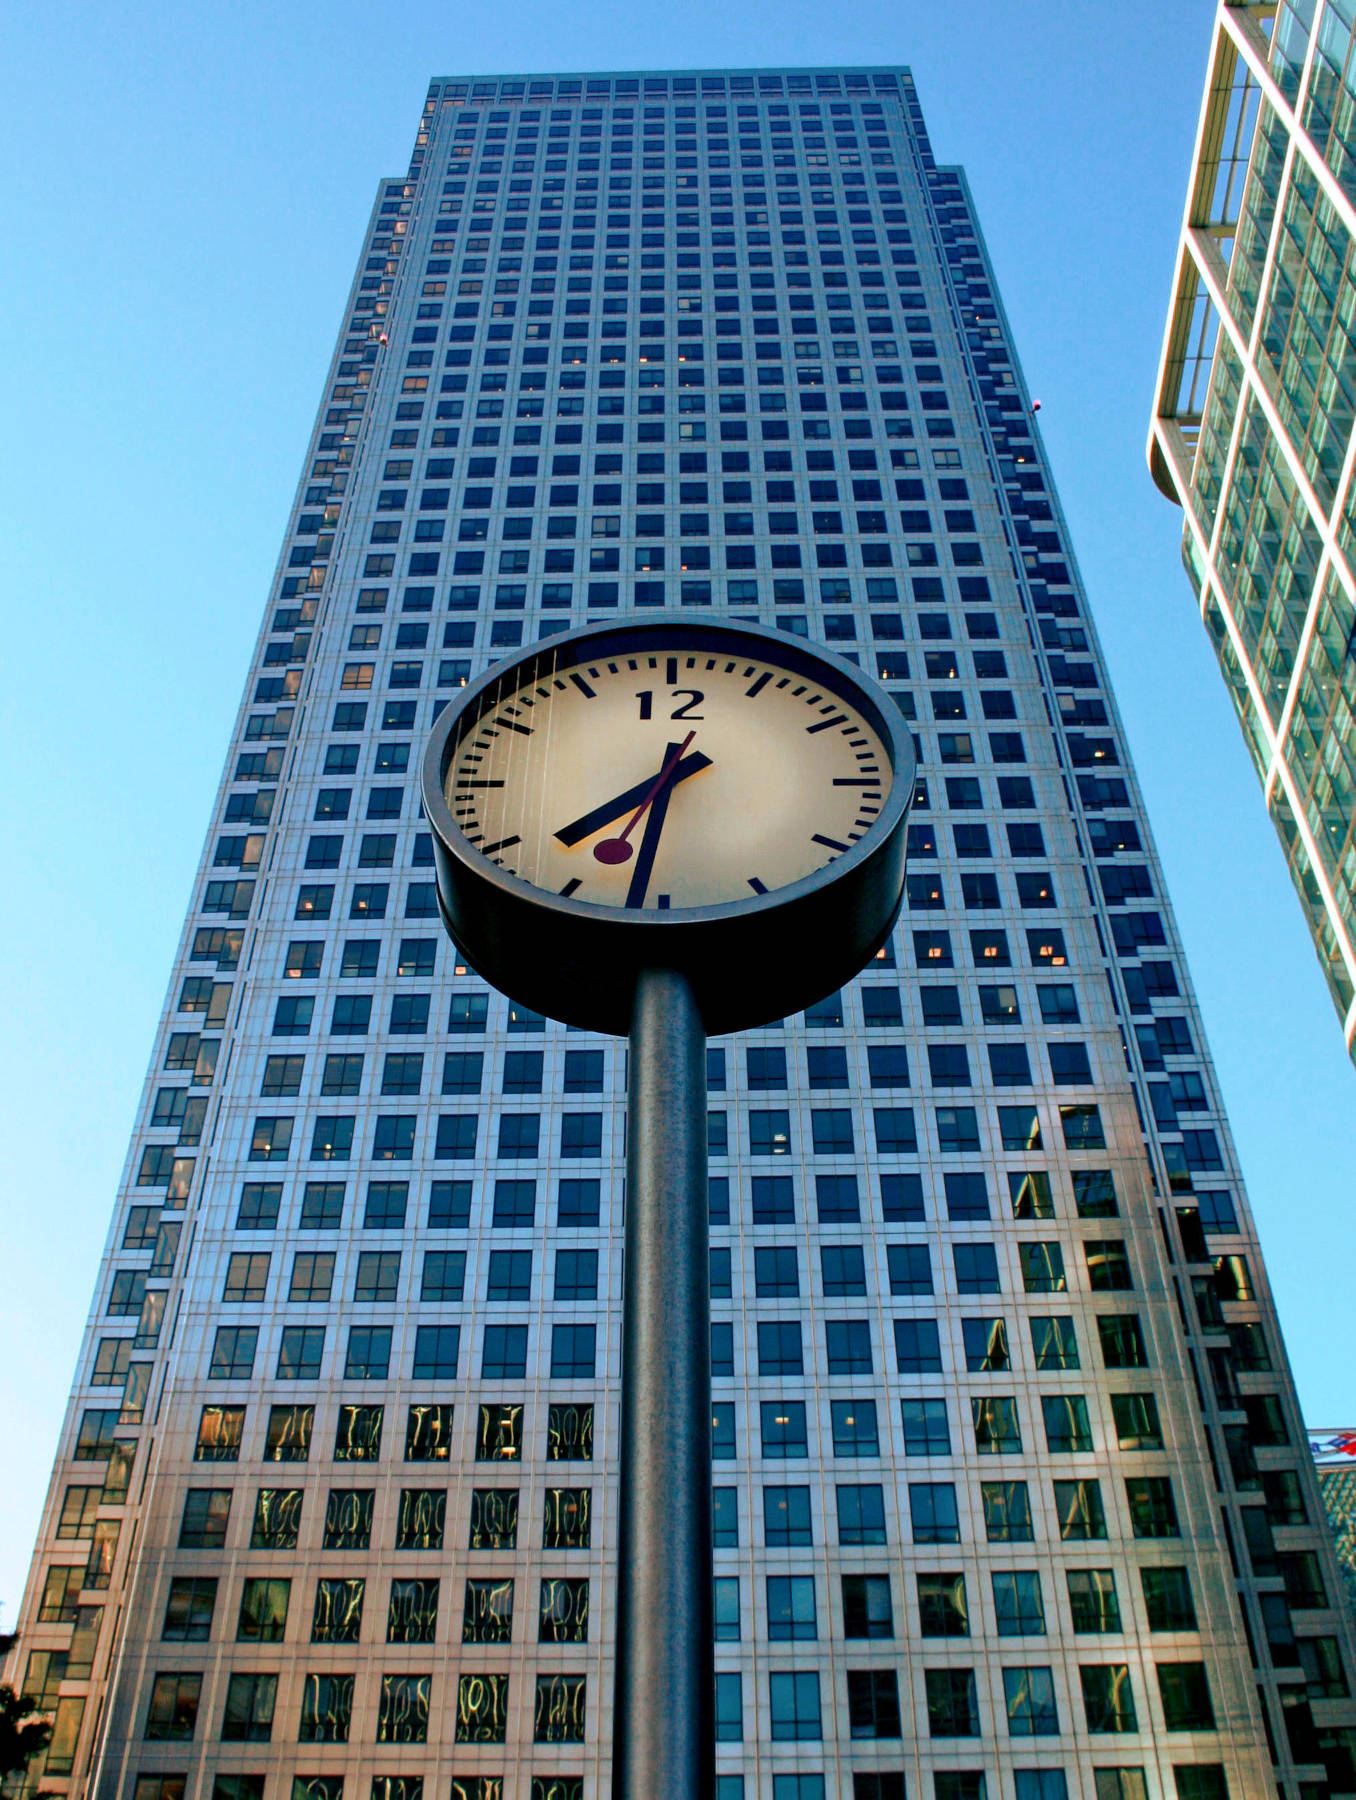 Konstantin Grcic’s Six Public Clocks: A Playful Homage to Timekeeping